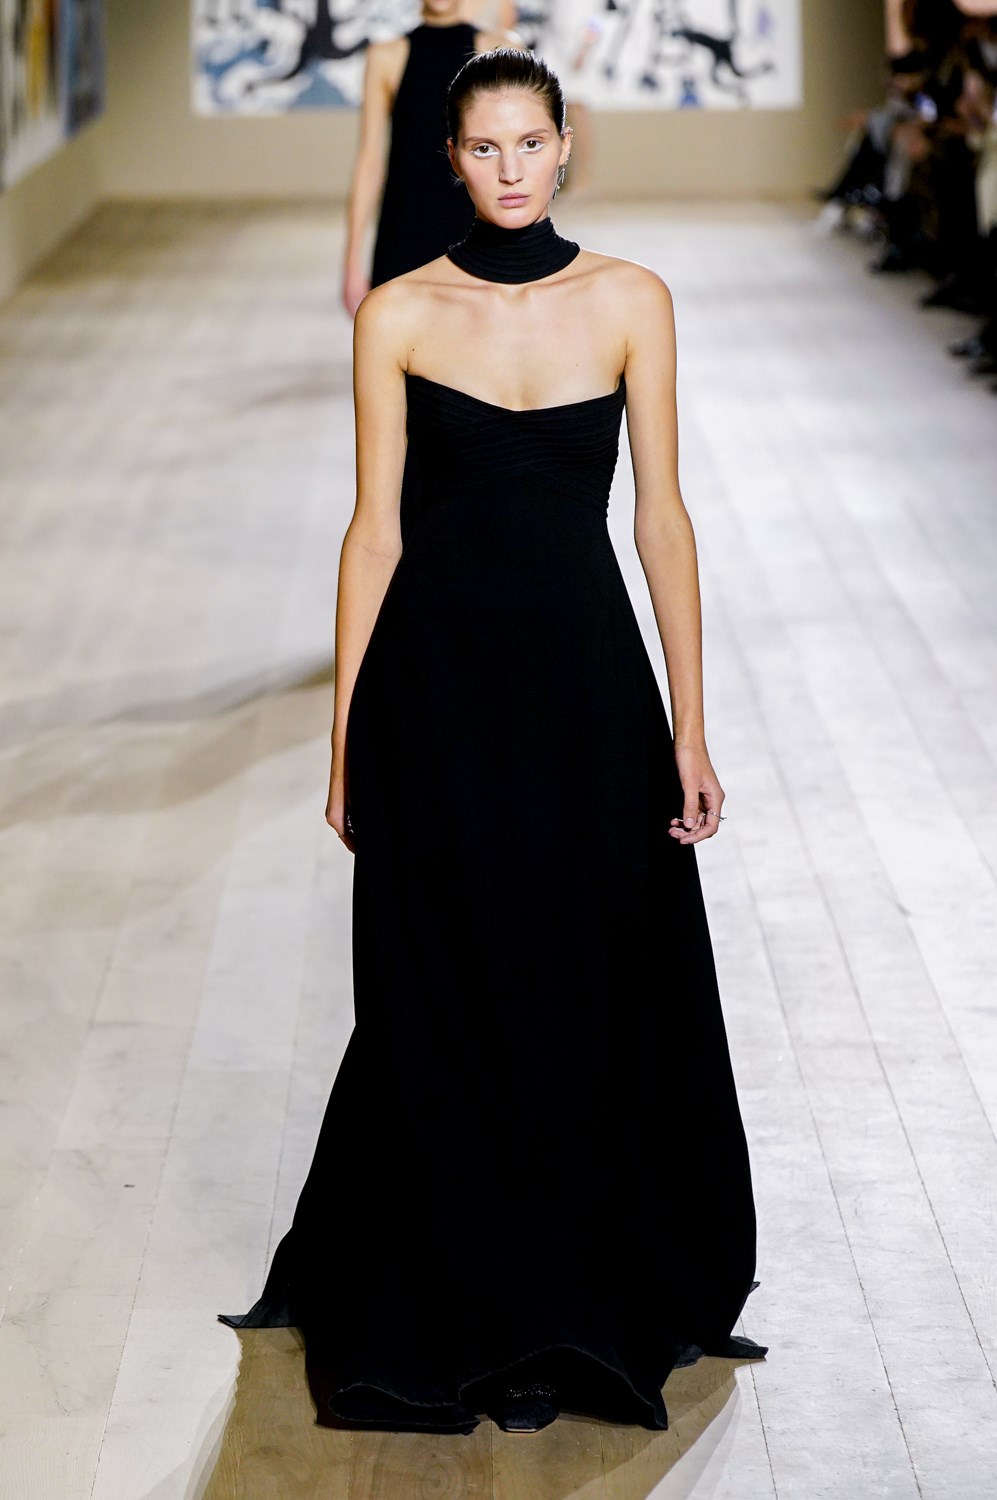 Christian Dior Spring 2022 Couture Fashion Show | The Impression